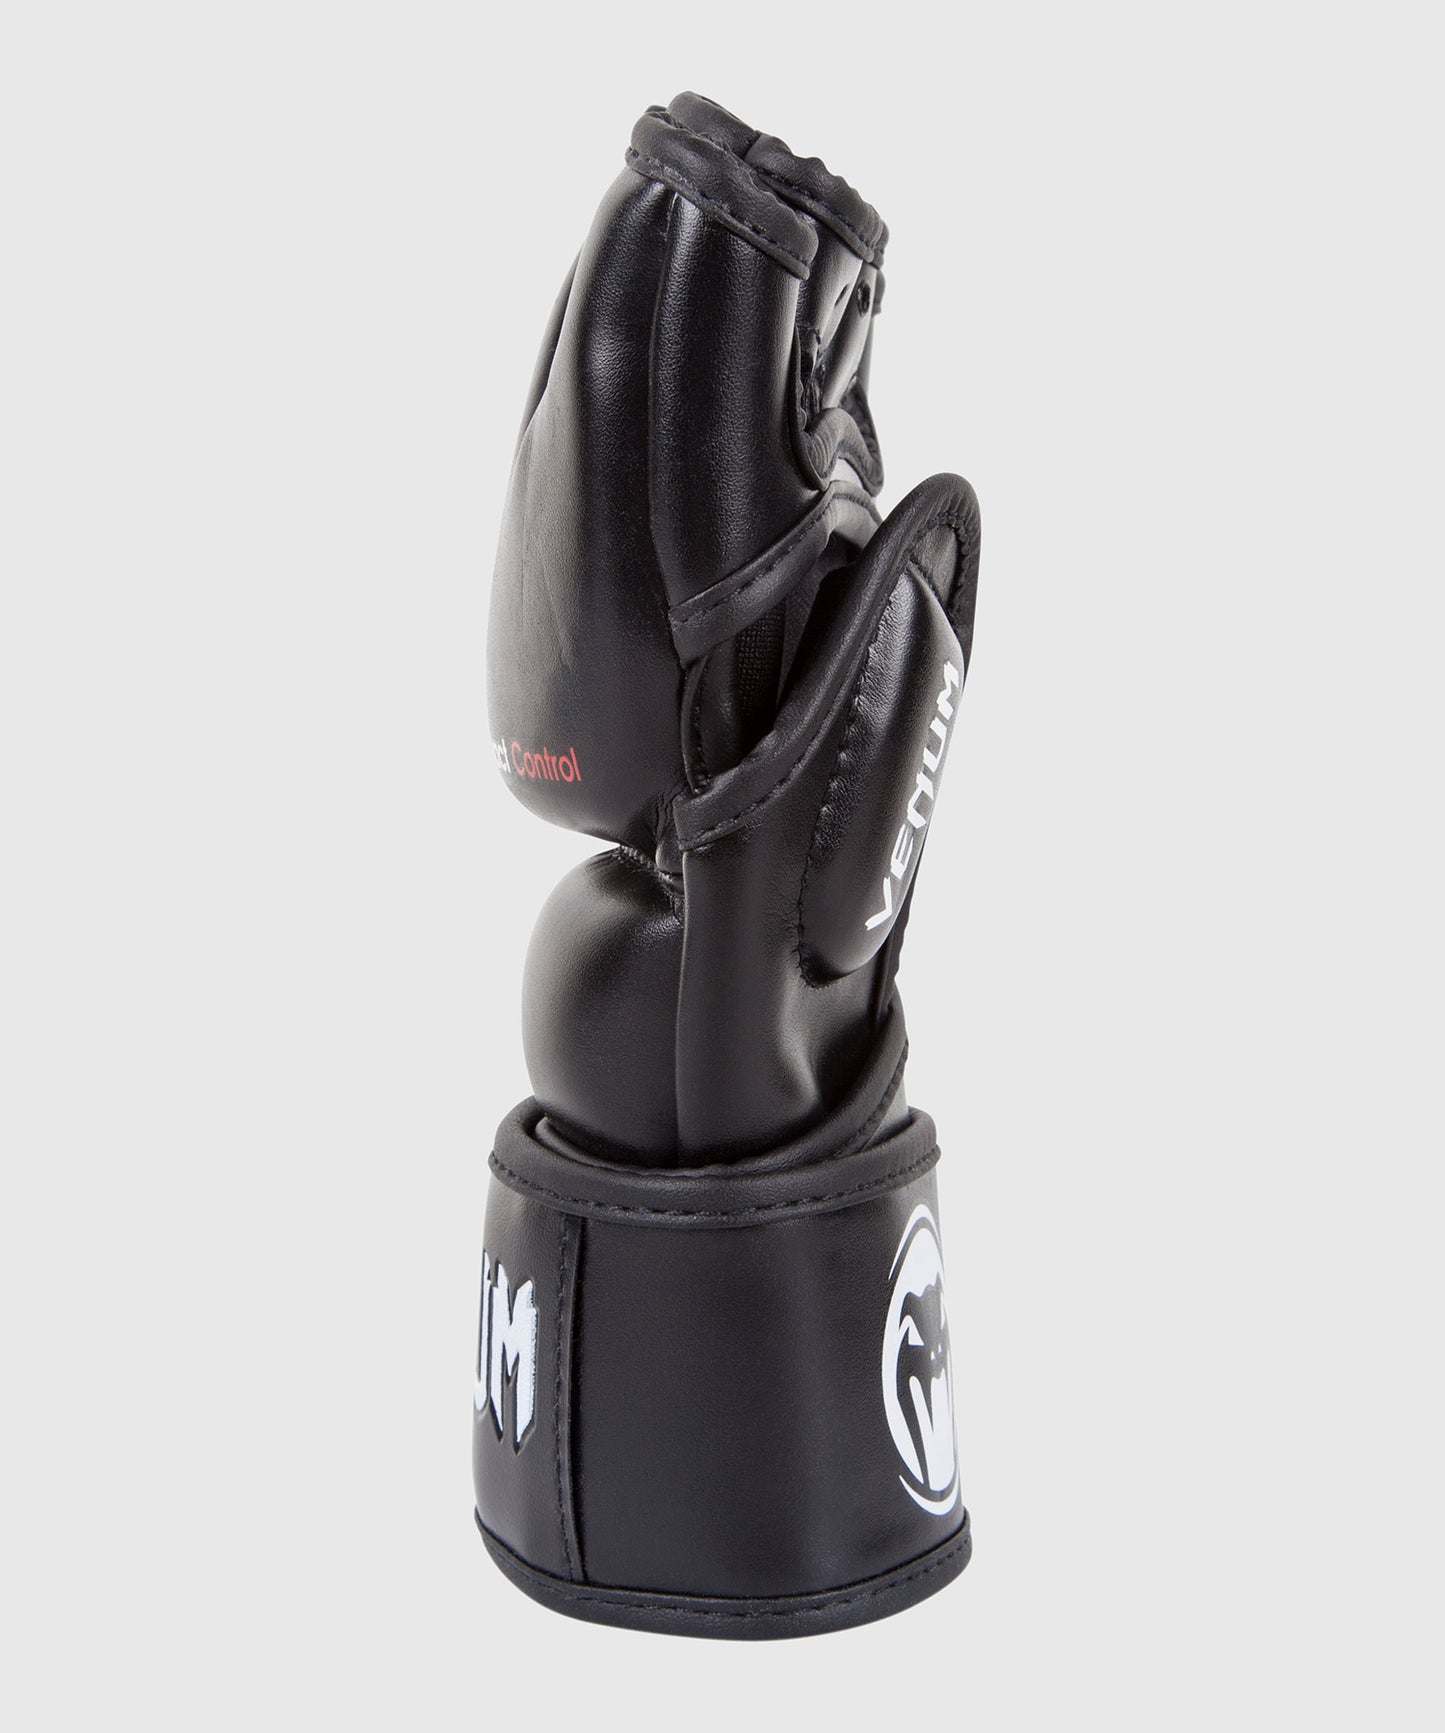 Venum Impact MMA Handschoenen - Skintex Leder - Zwart